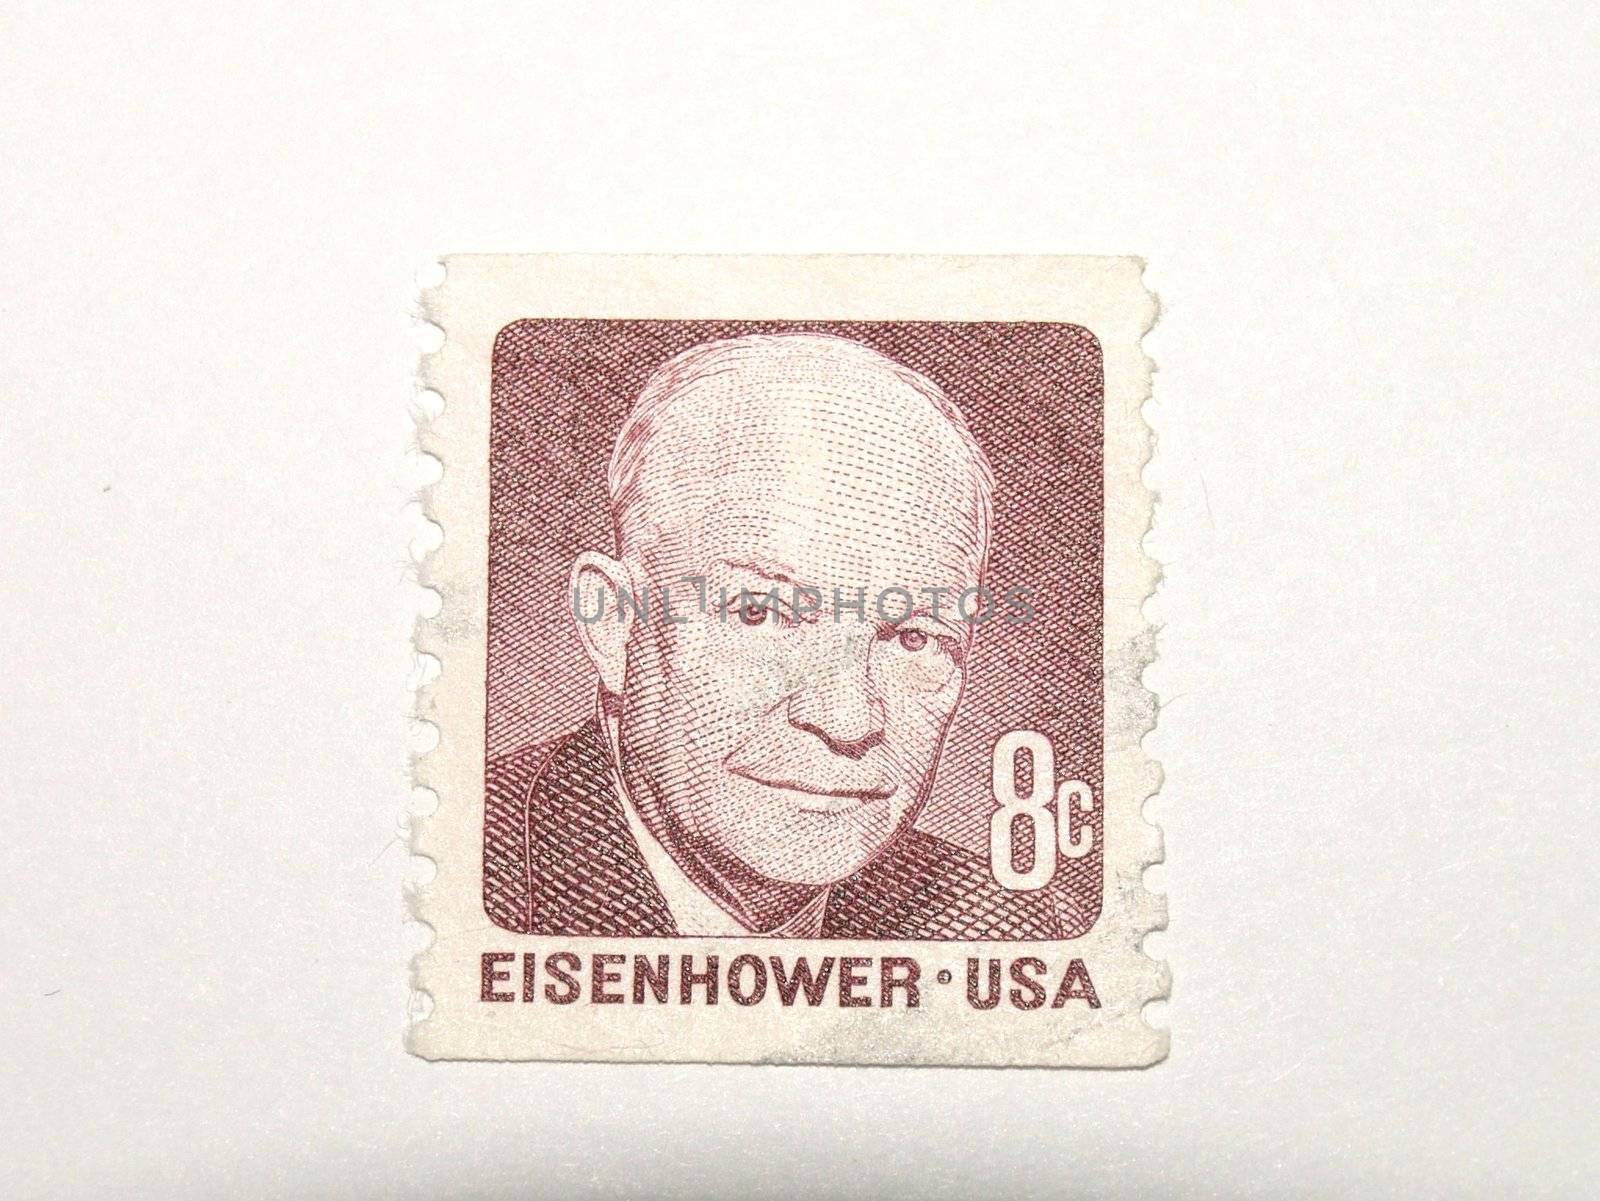 stamp with Eisenhower